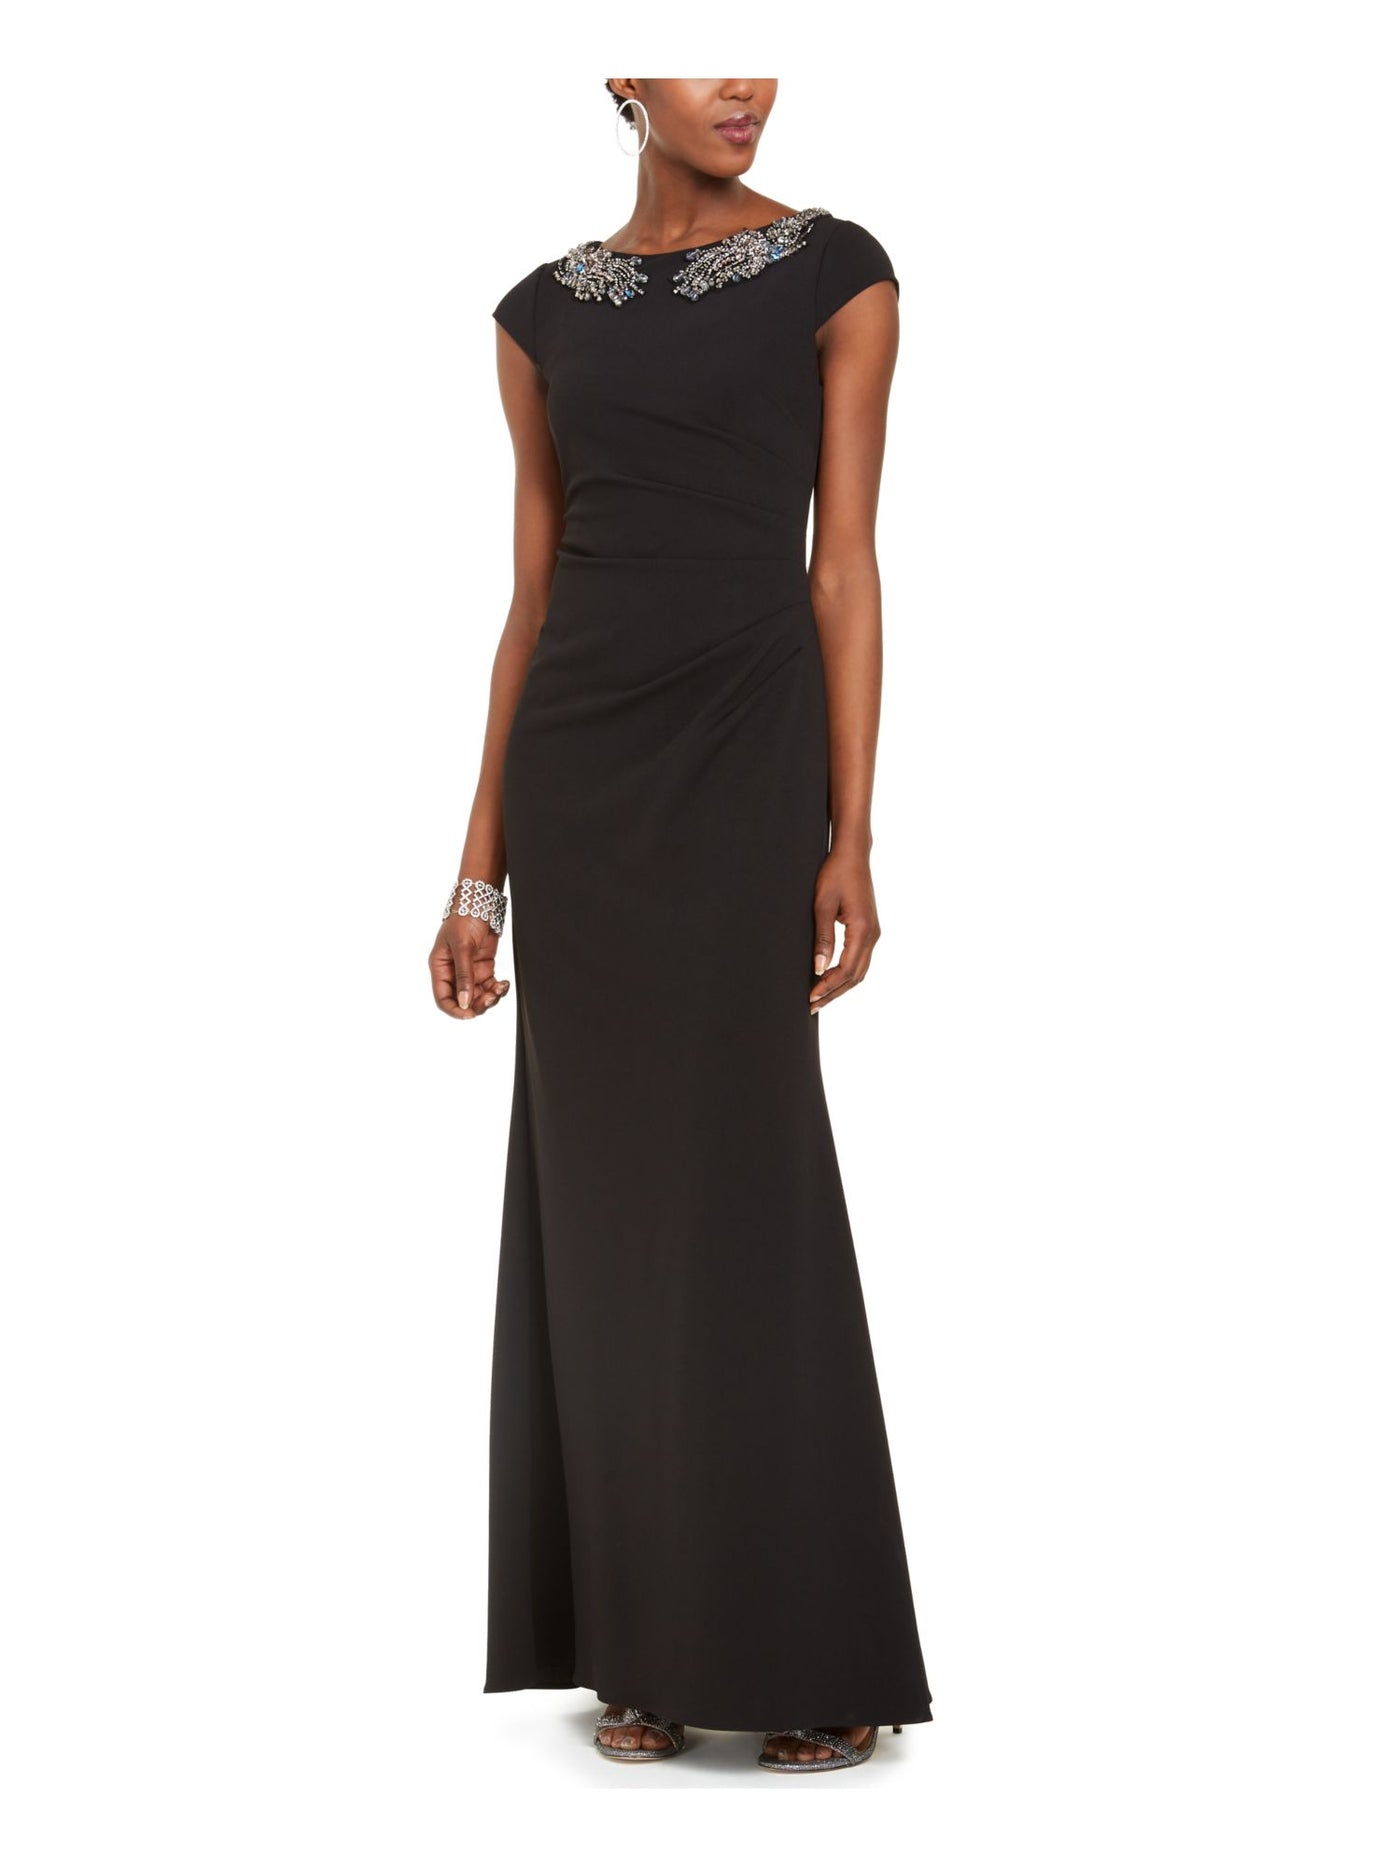 ADRIANNA PAPELL Womens Black Beaded Cap Sleeve Jewel Neck Full-Length Formal Sheath Dress 8